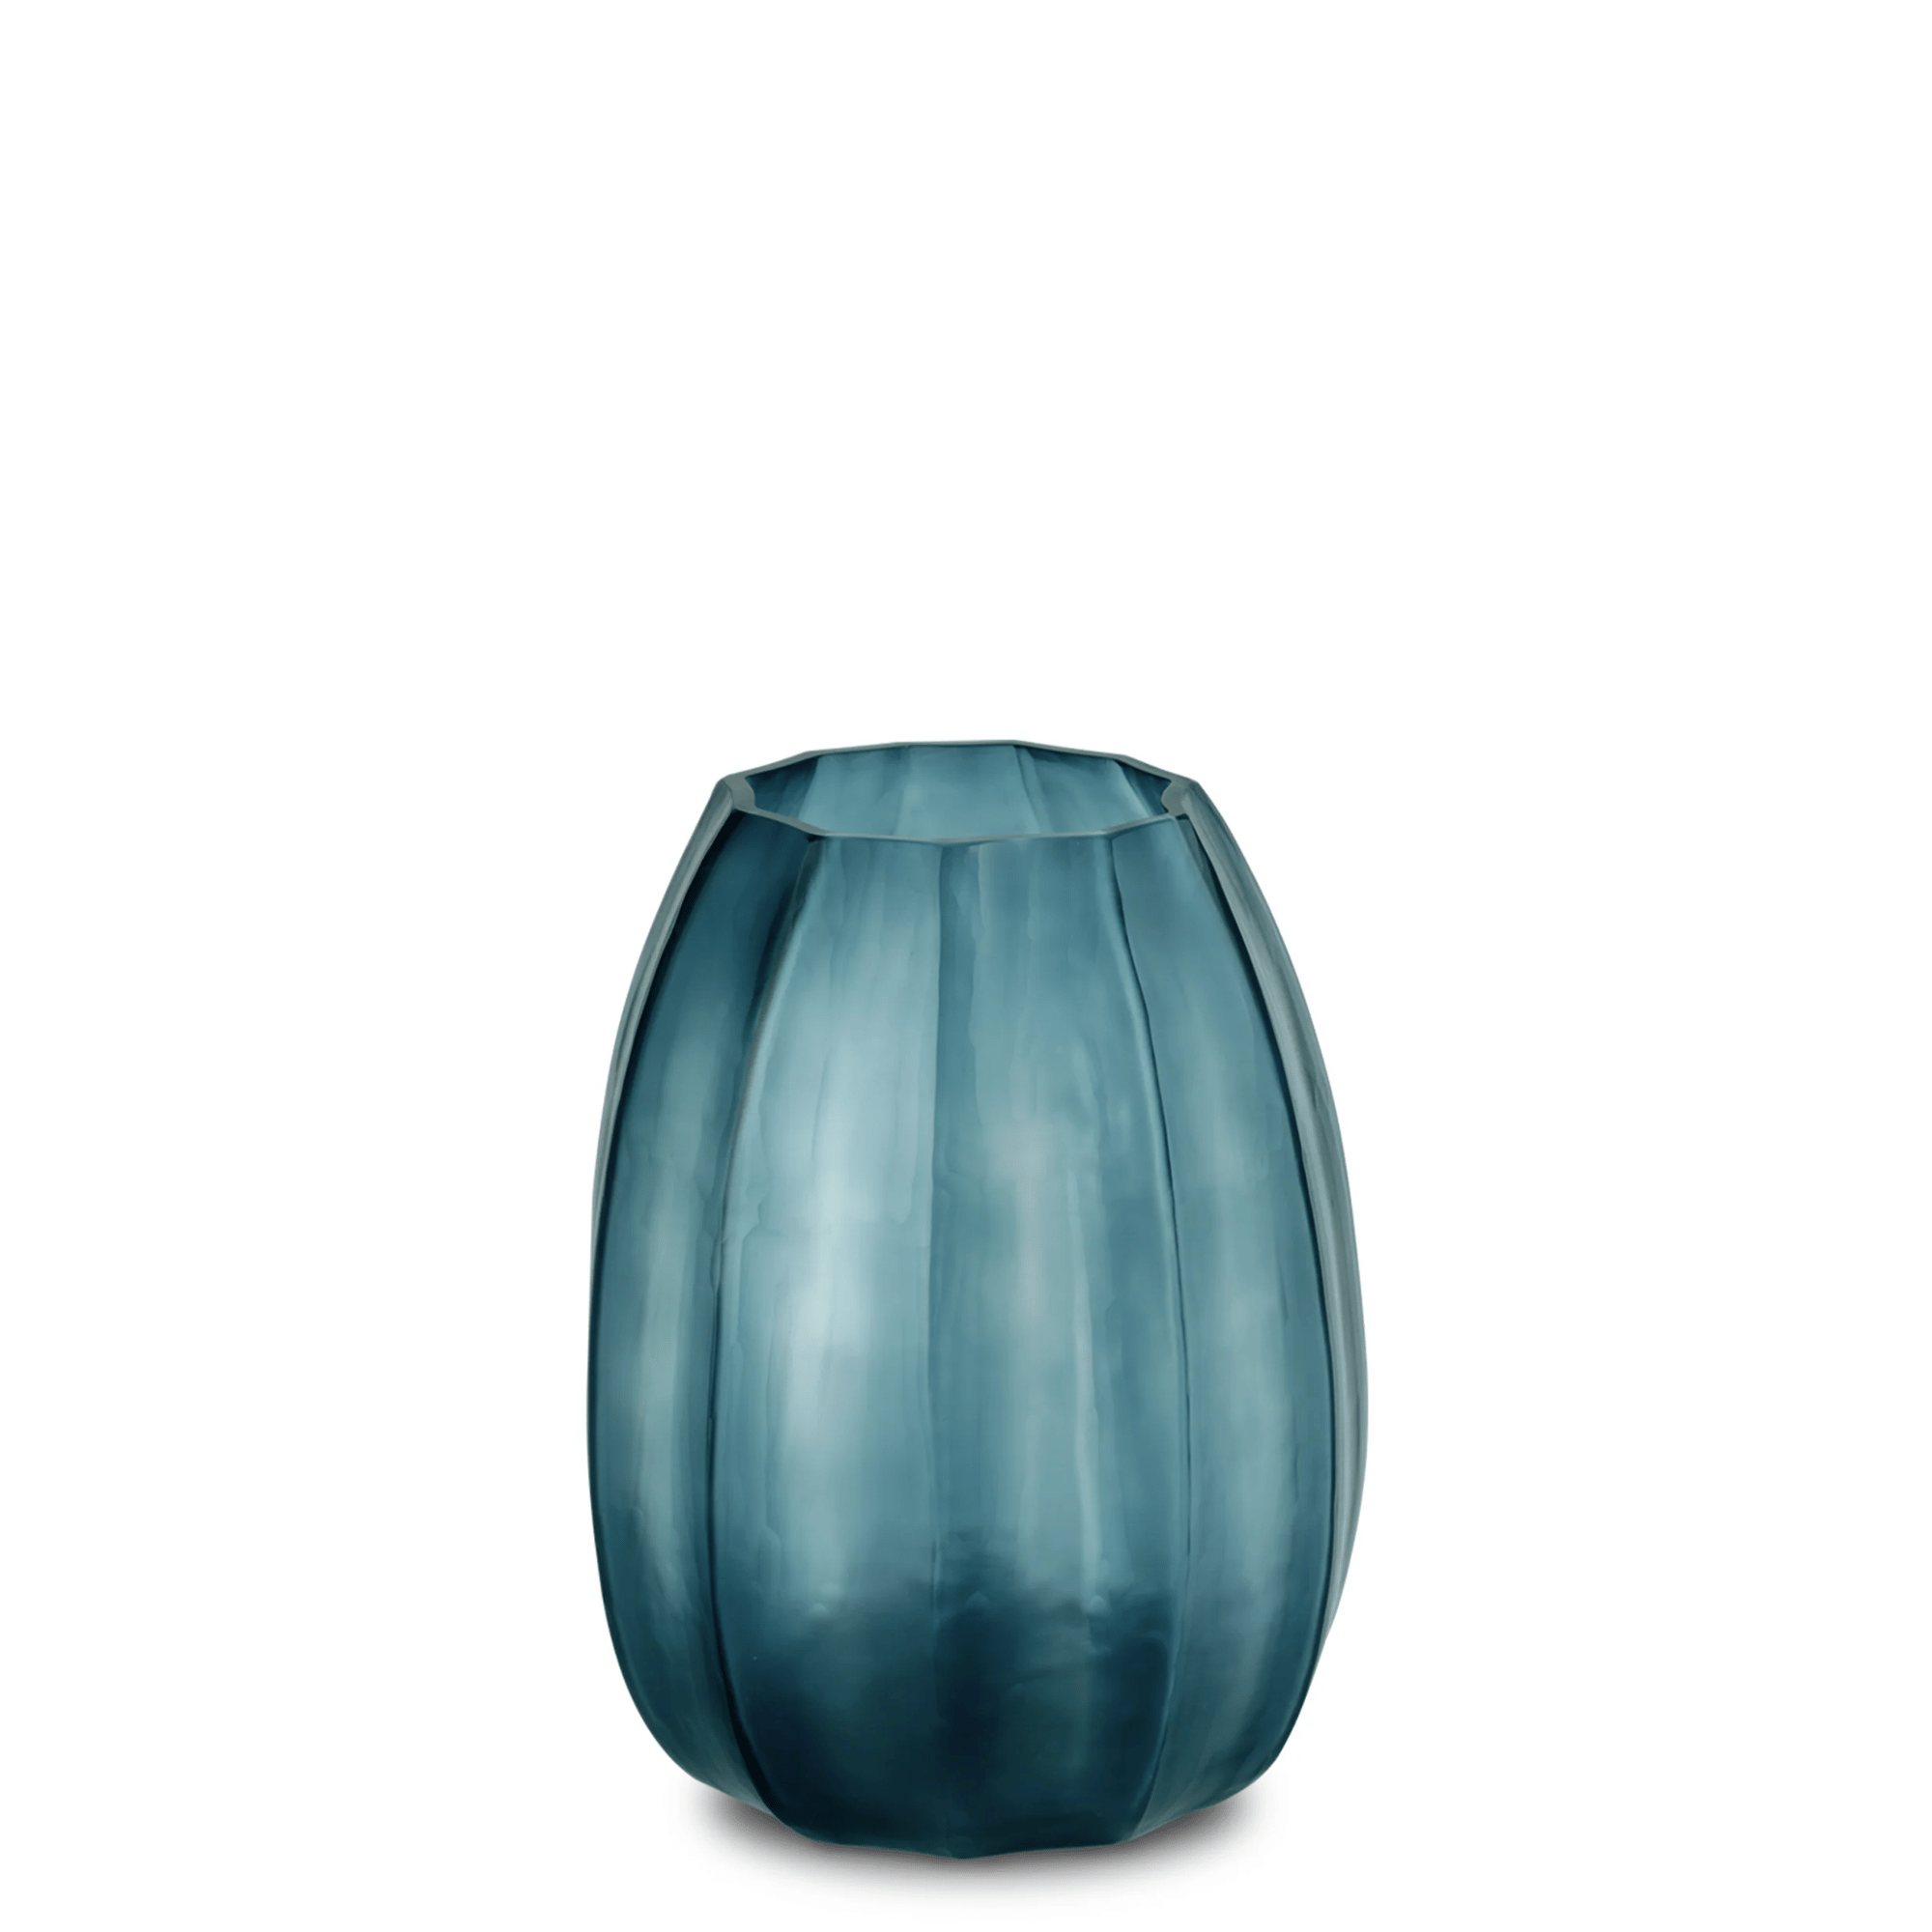 Guaxs blue glass vase